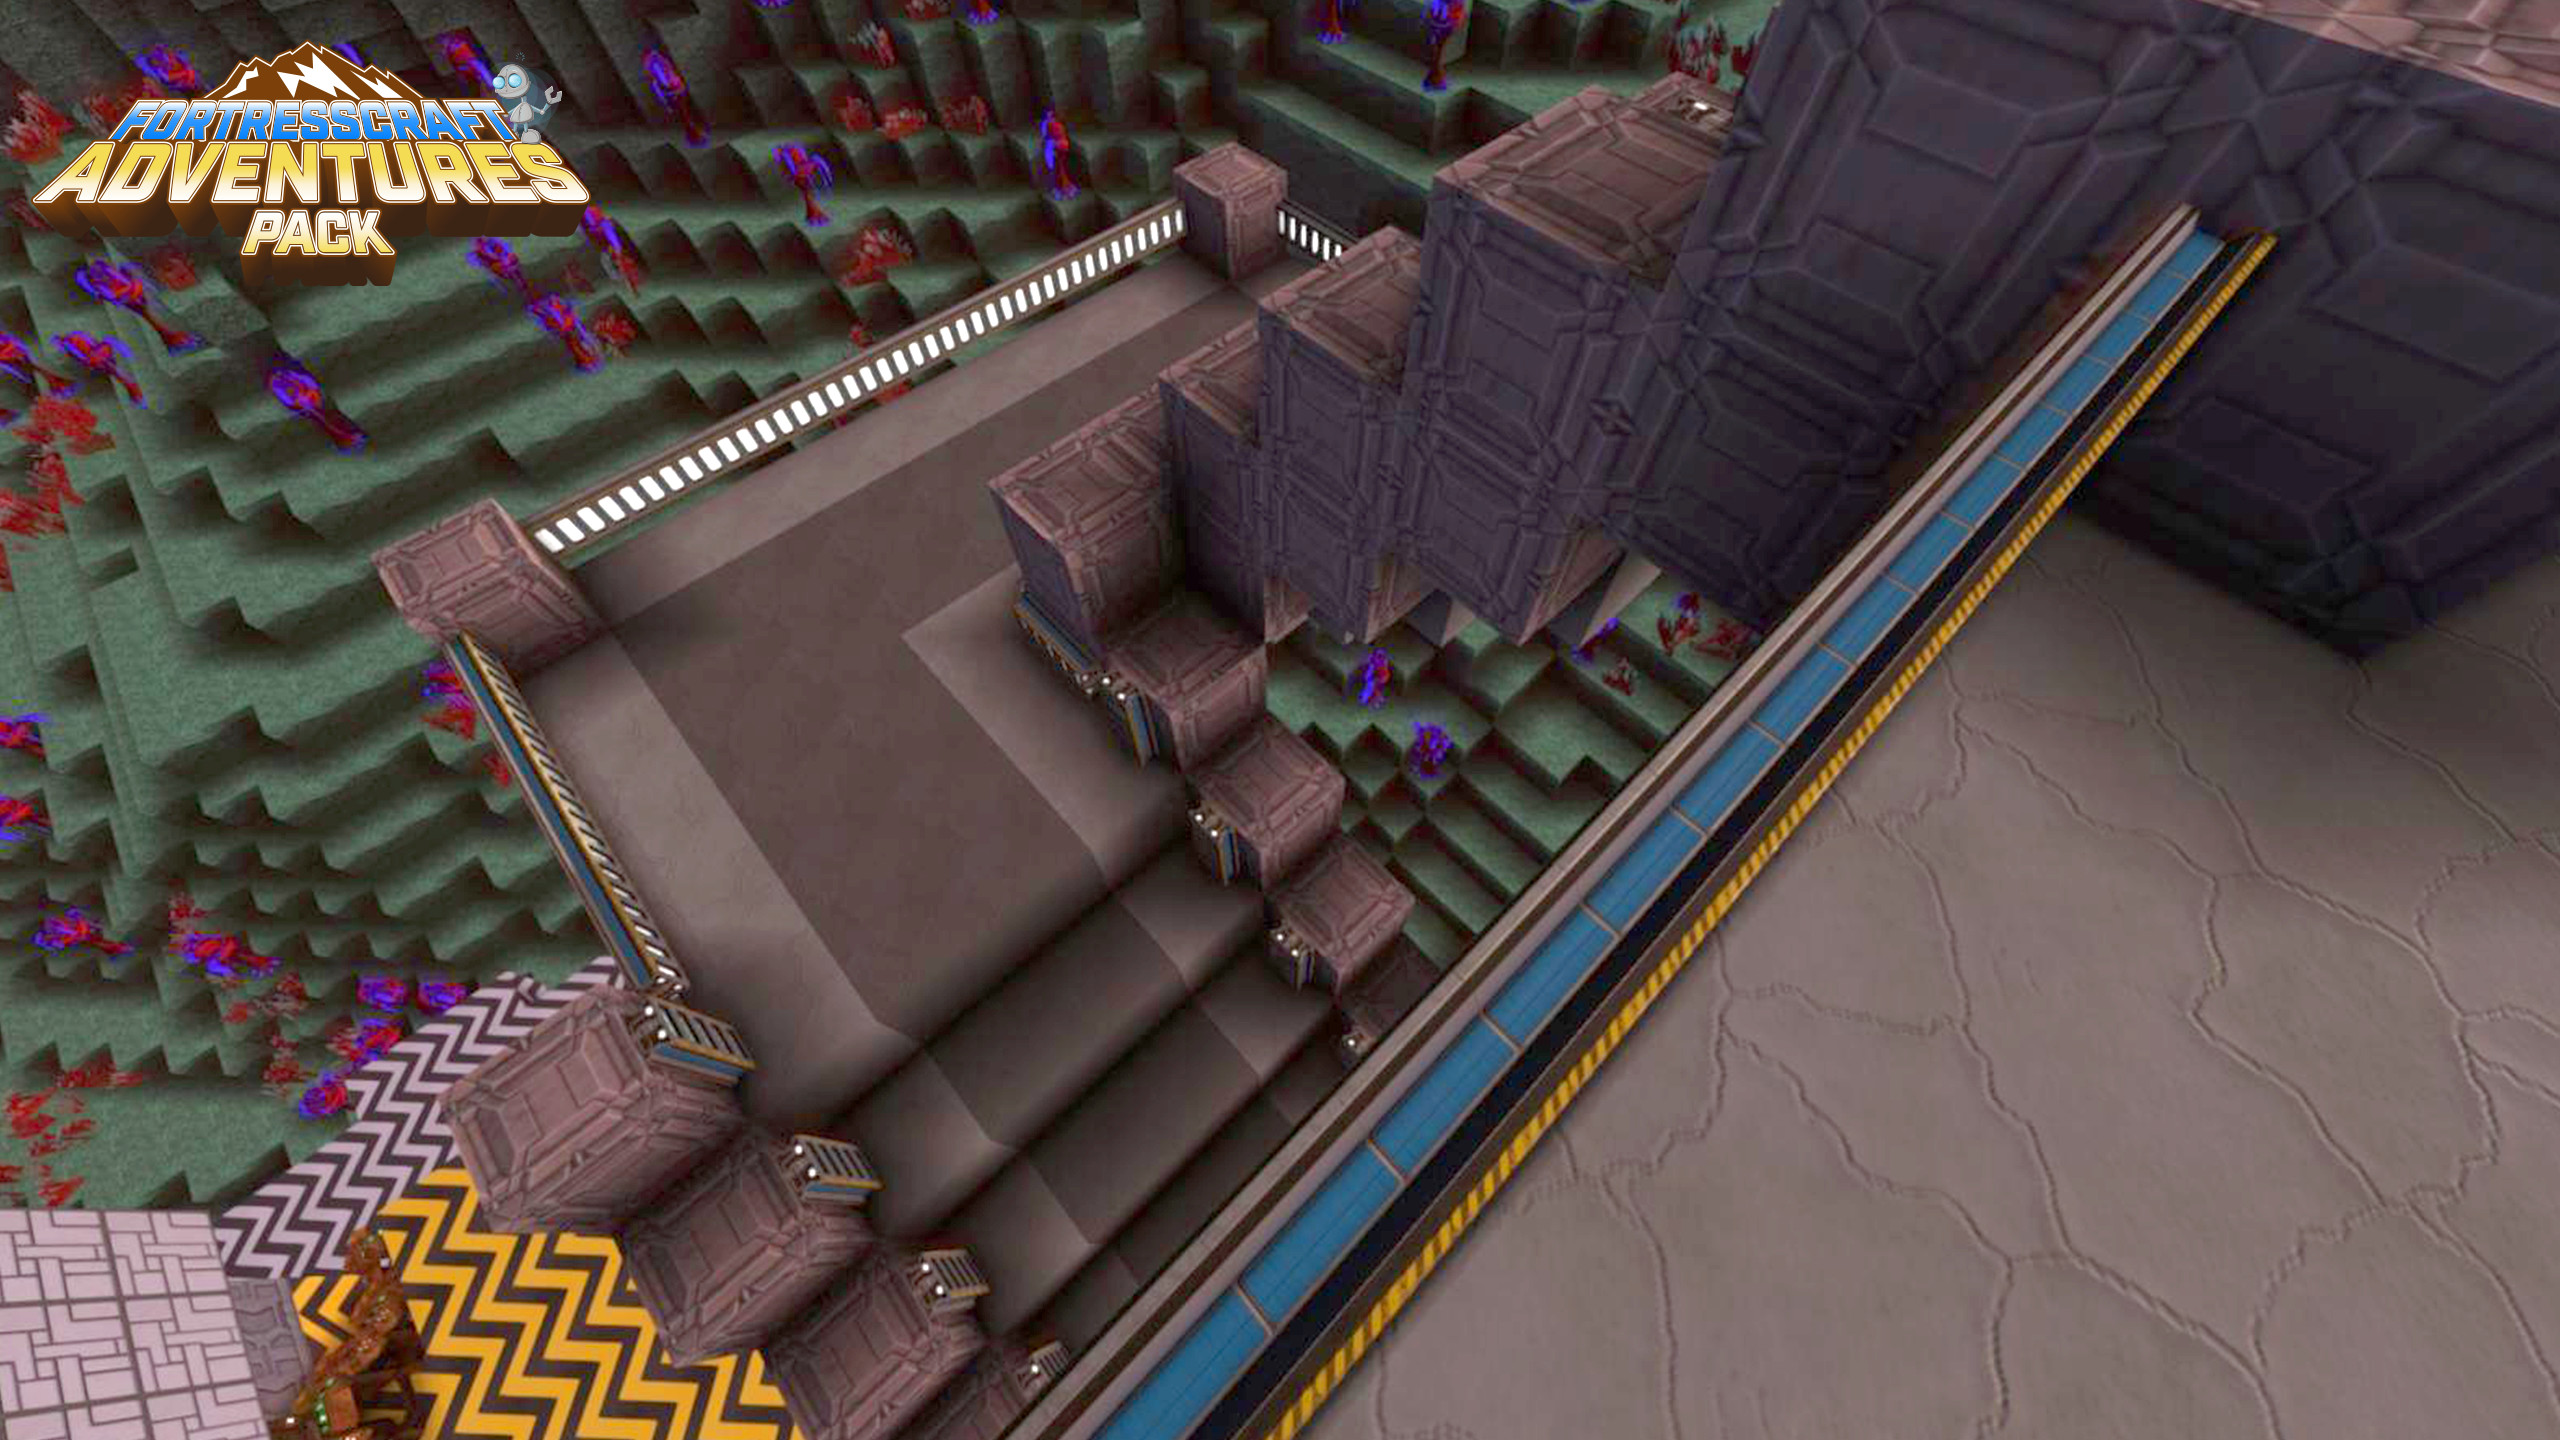 FortressCraft Evolved: Adventures Pack screenshot